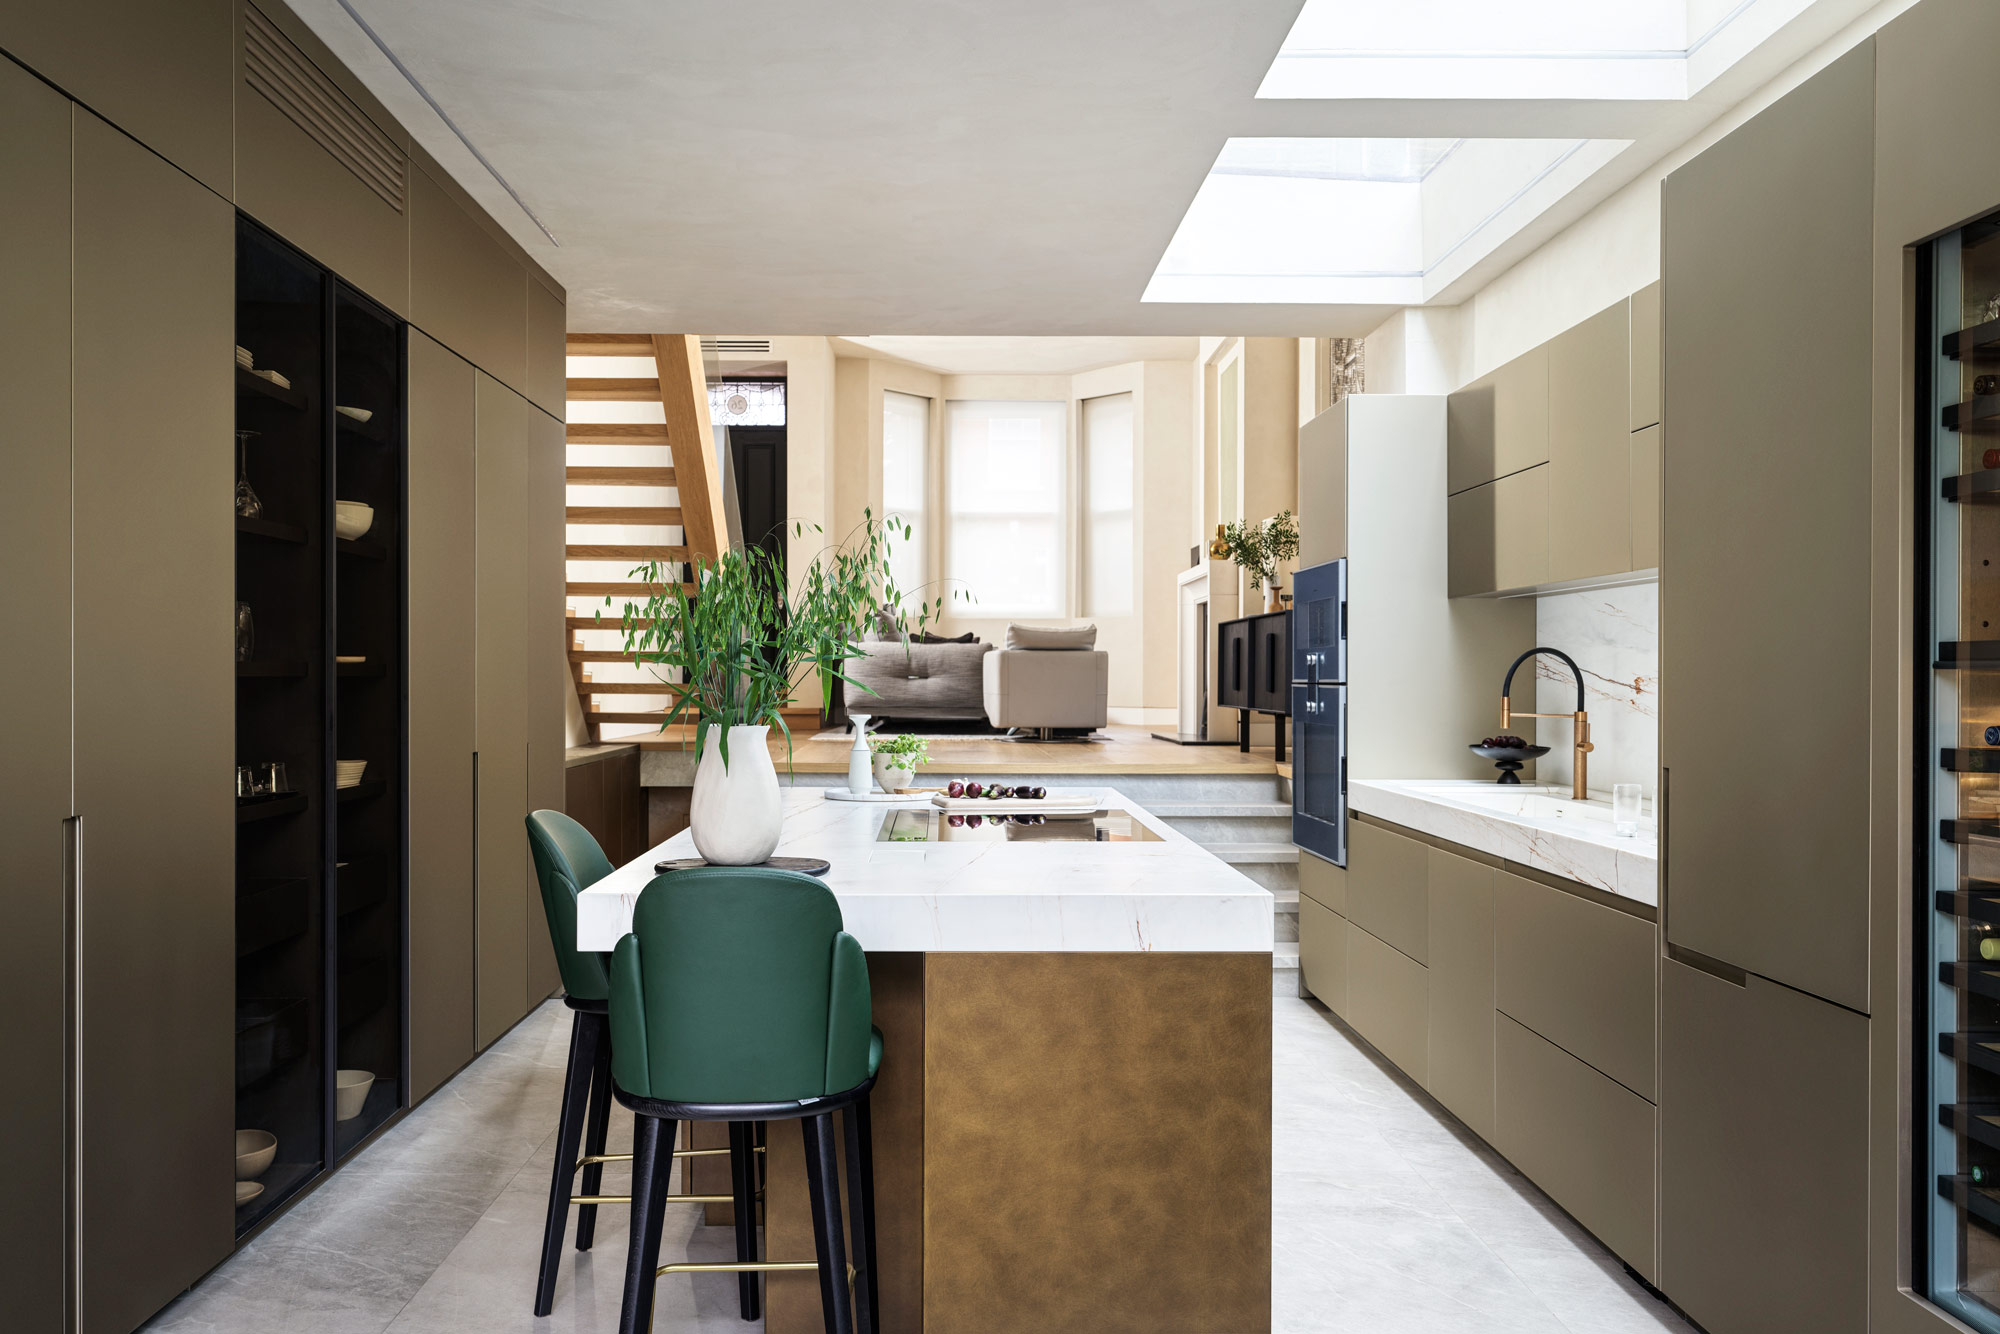 Fontana Arundel Terrace Barnes - luxury kitchen London | Design as Art | interior architectural design studio